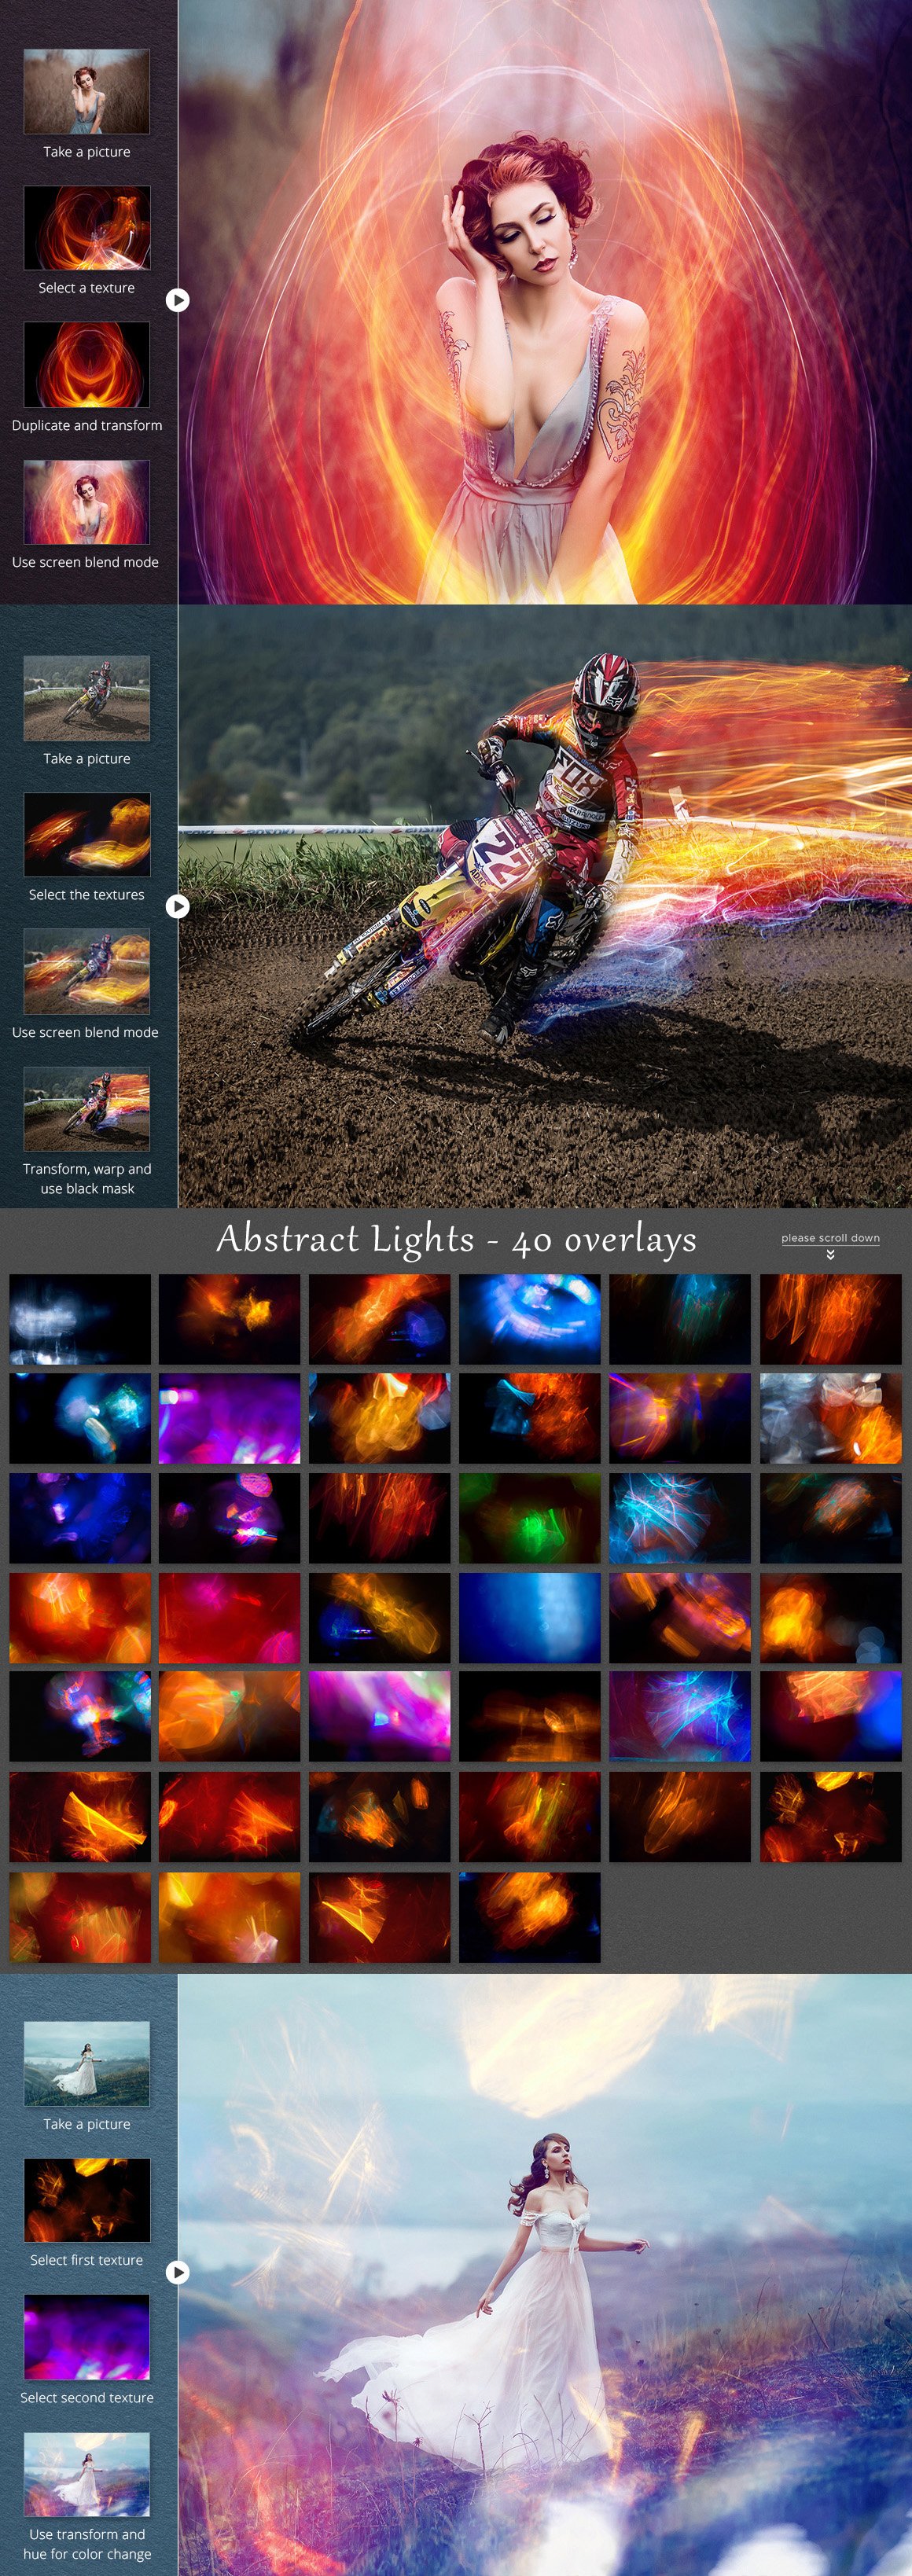 mystical lights photo overlays